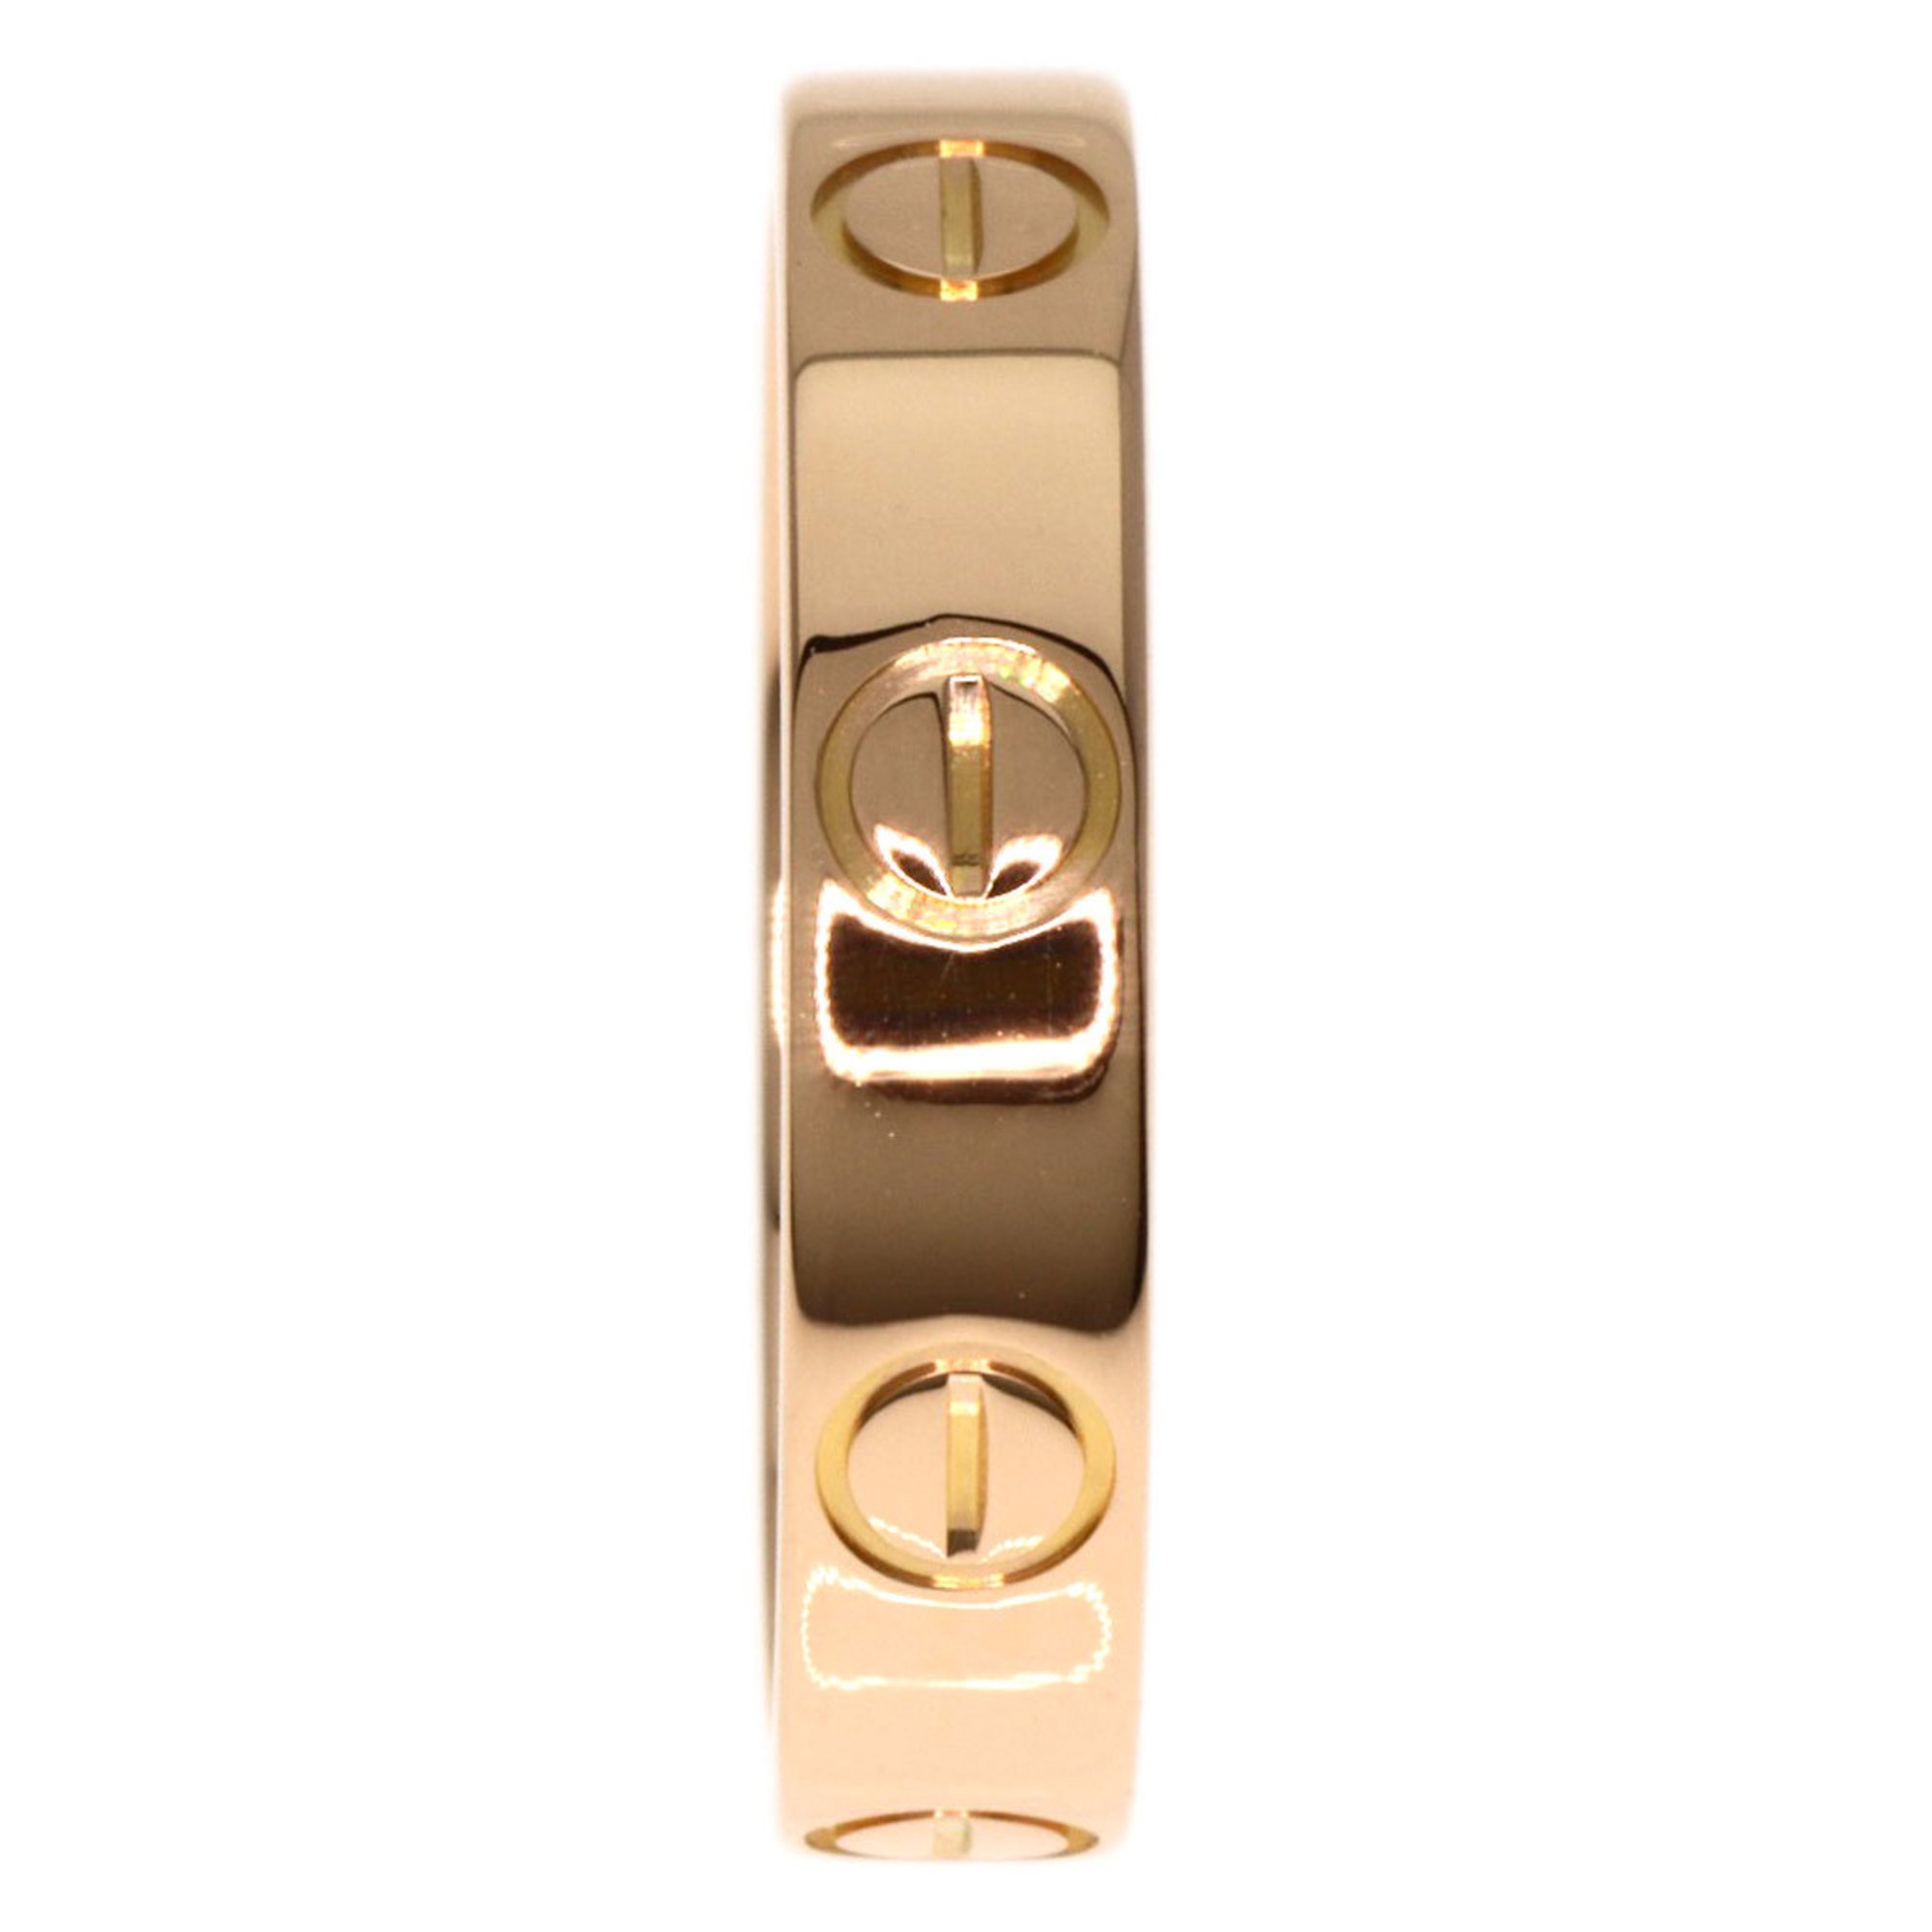 Cartier Love Ring #48 Ring, K18 Pink Gold, Women's